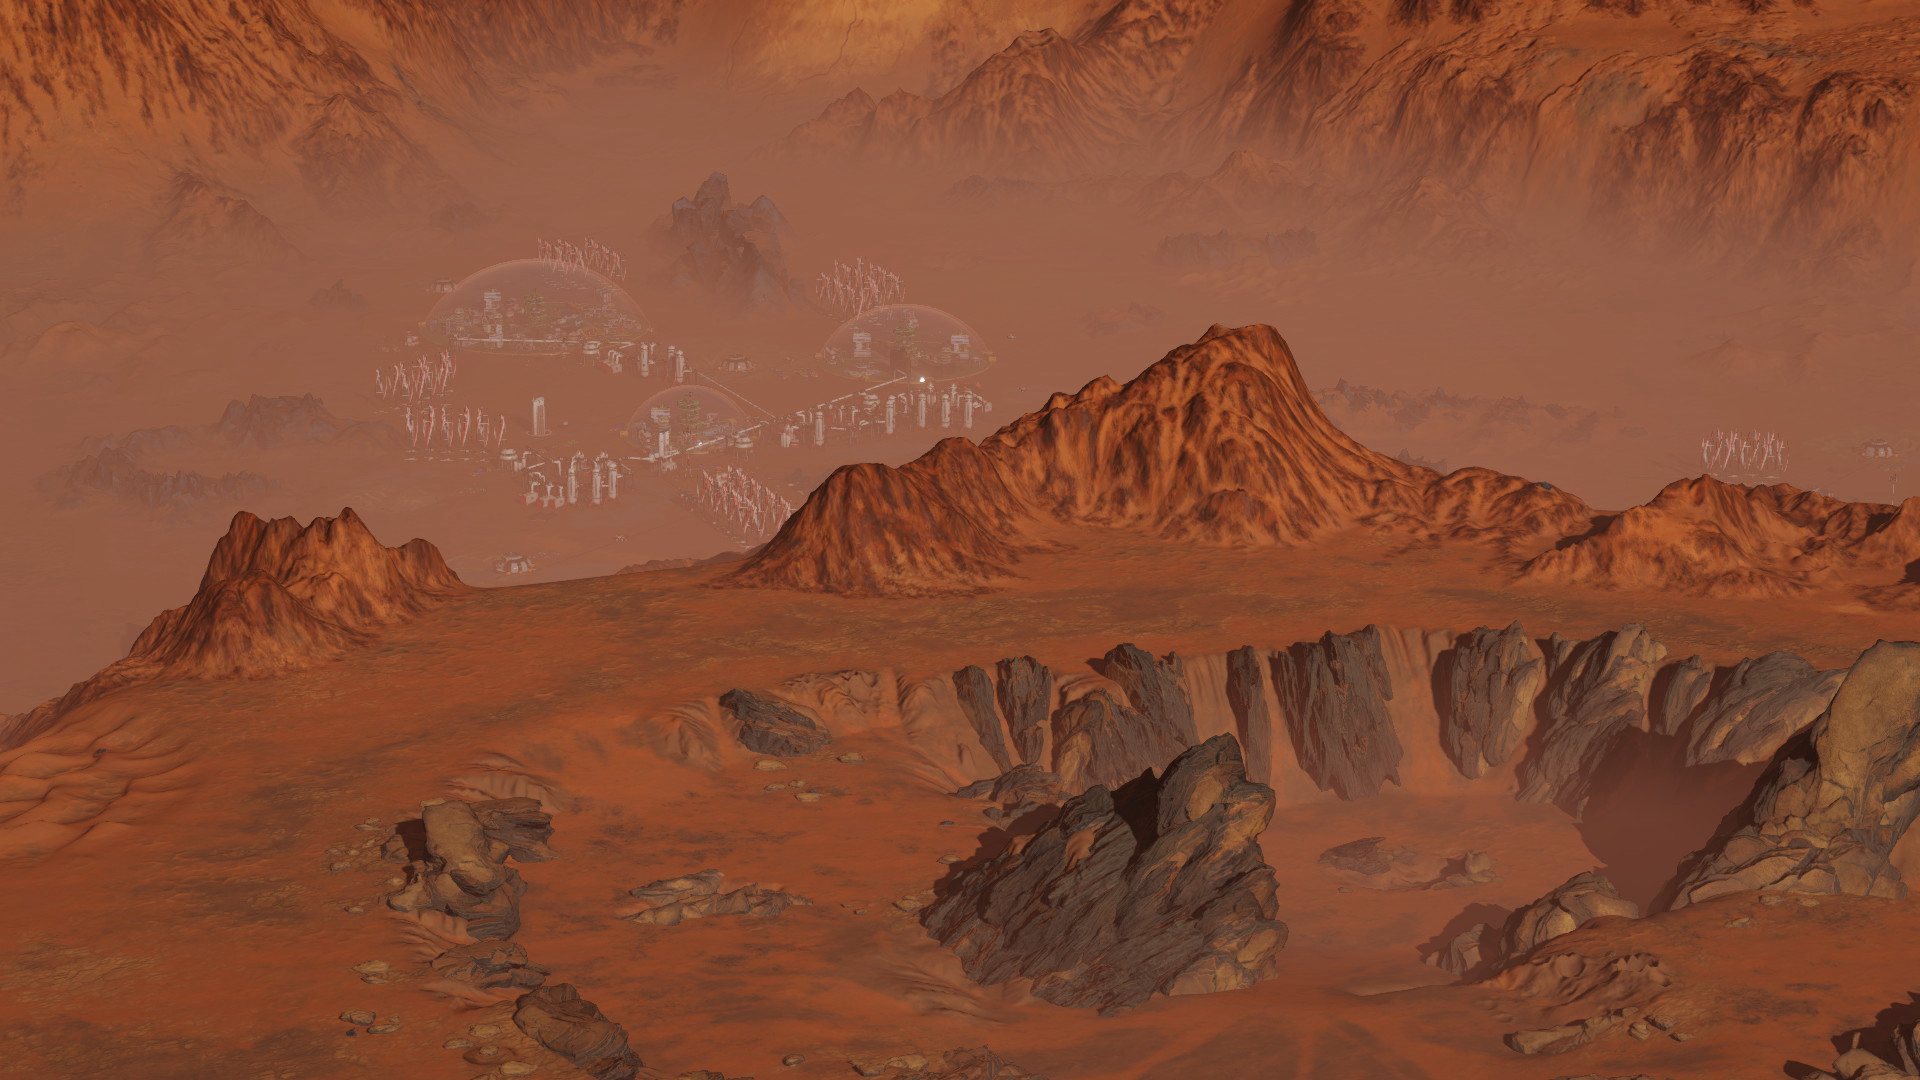 Surviving Mars - Season Pass DLC EU Steam CD Key